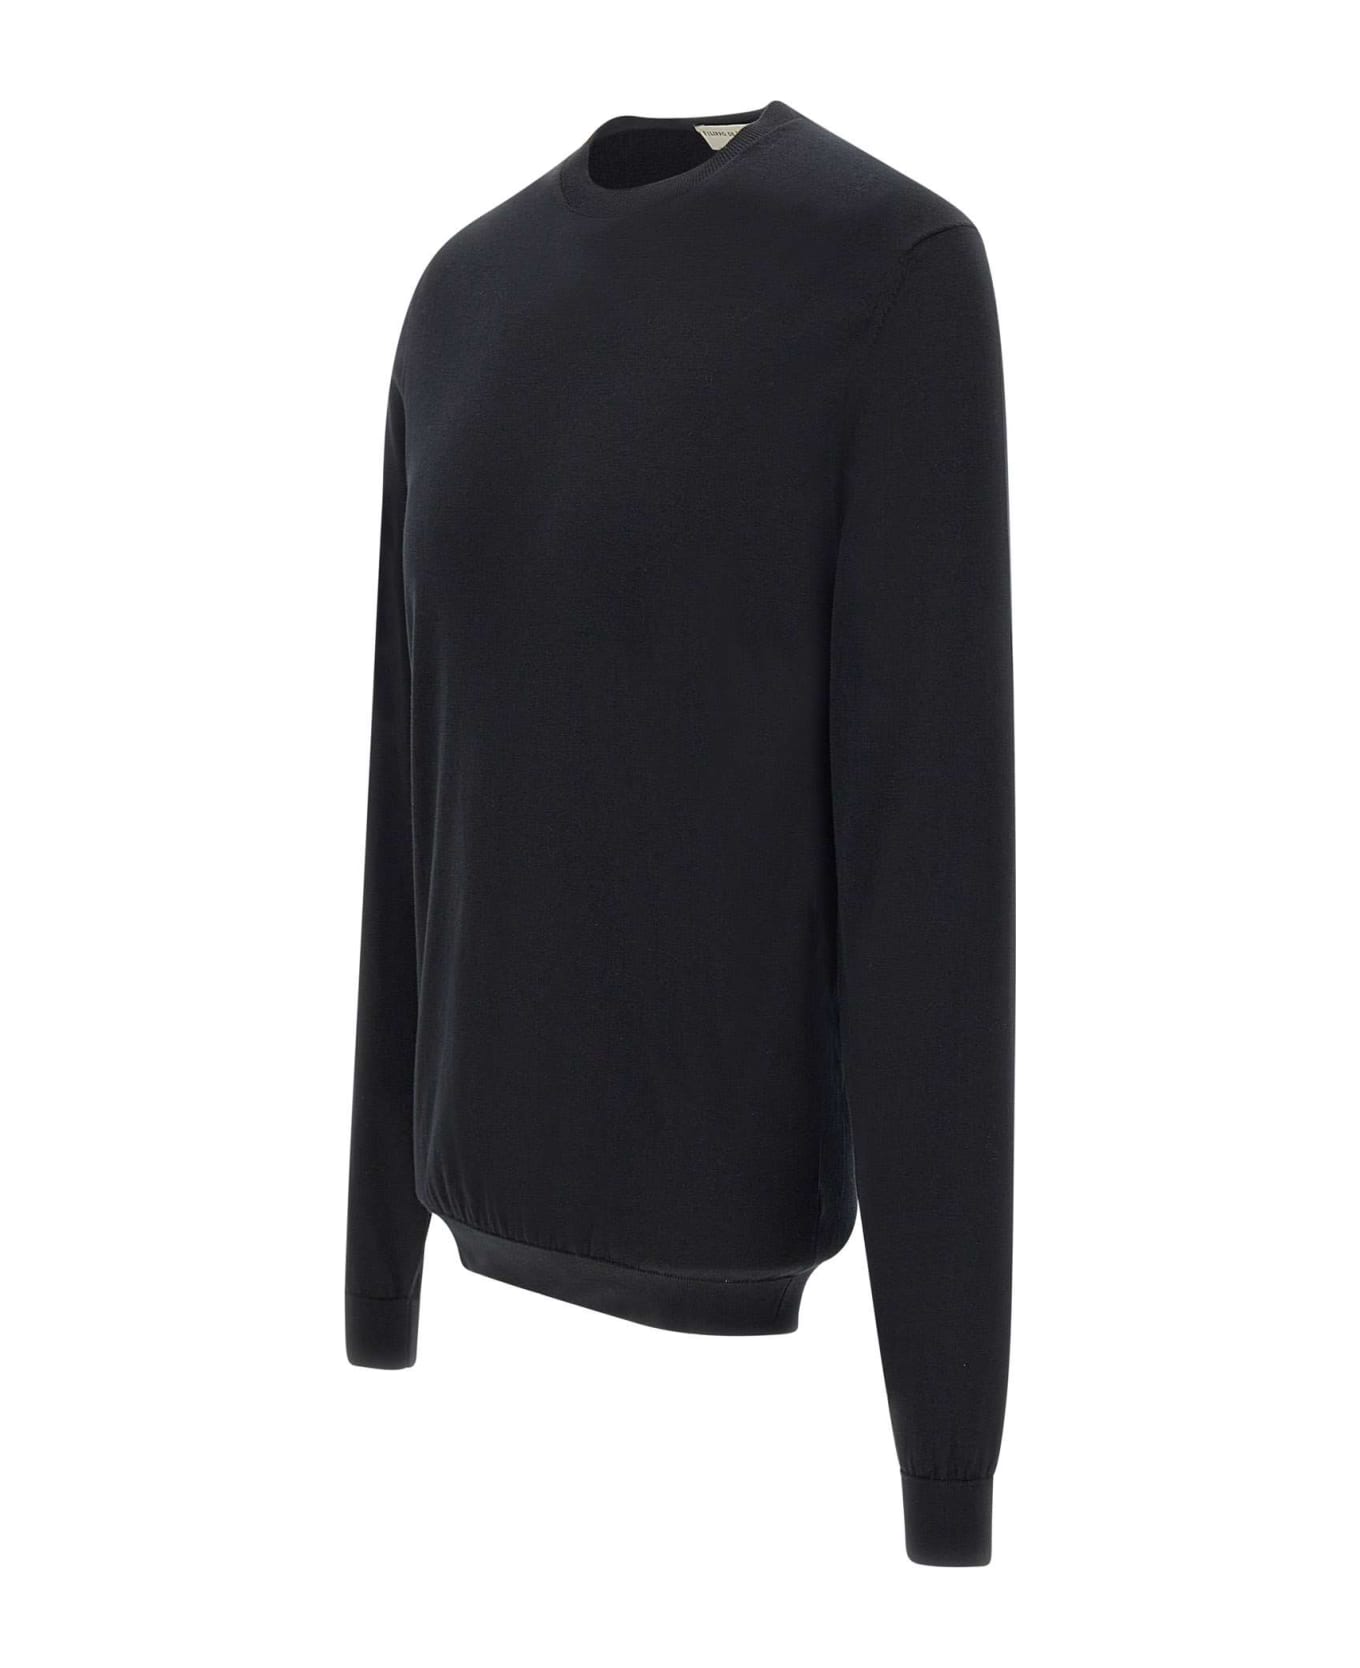 Filippo De Laurentiis Superlight Sweater Cotton - BLACK